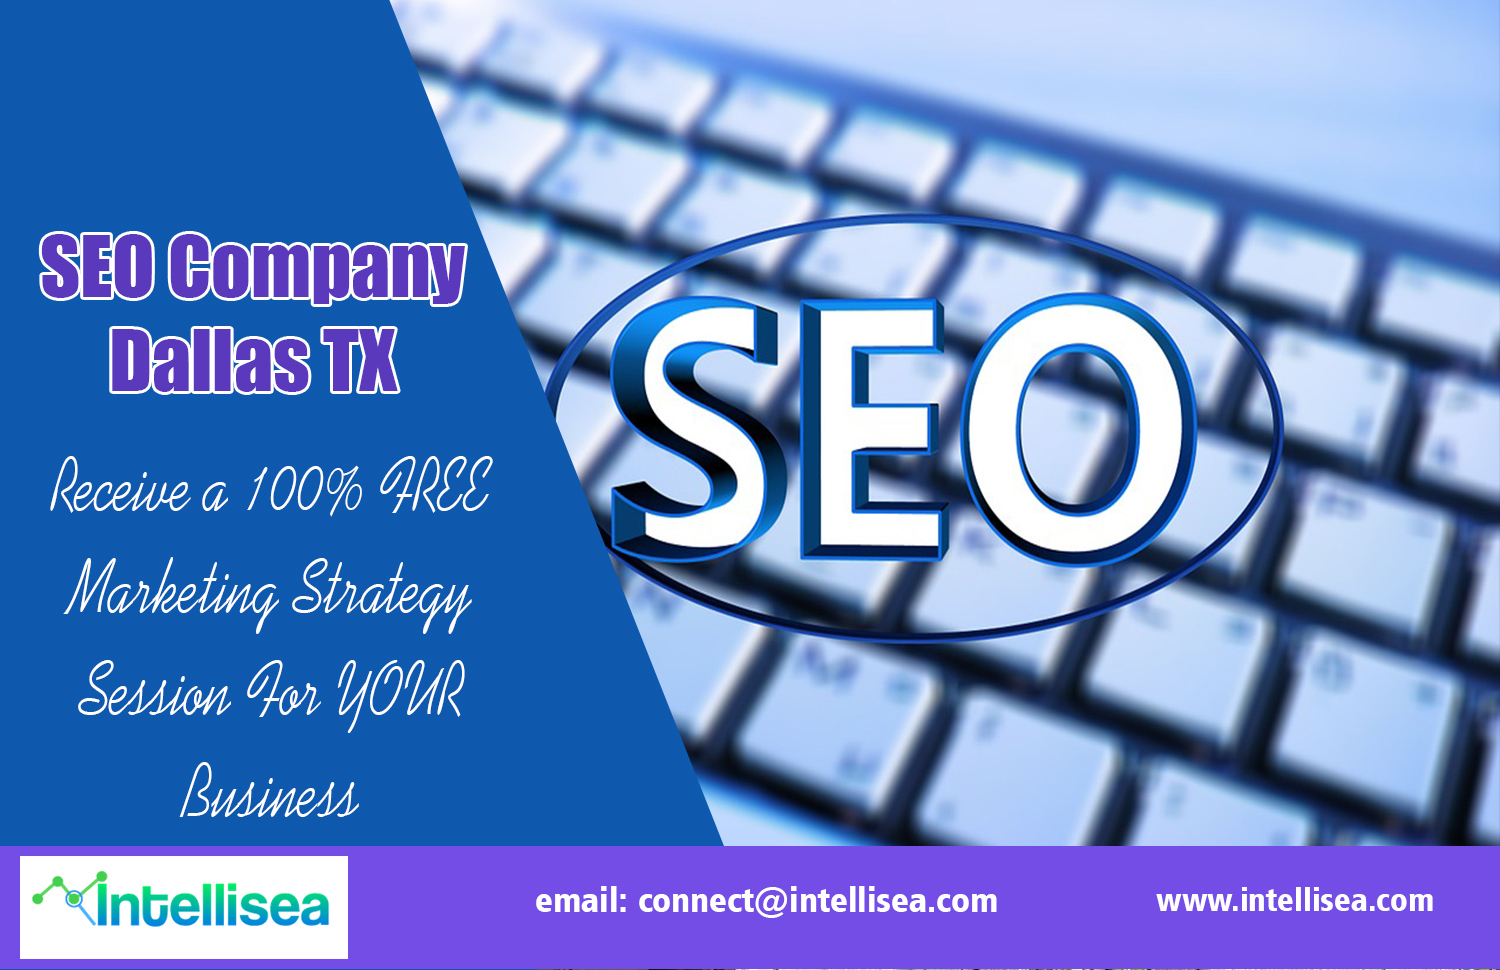 SEO Company Dallas TX | intellisea.com